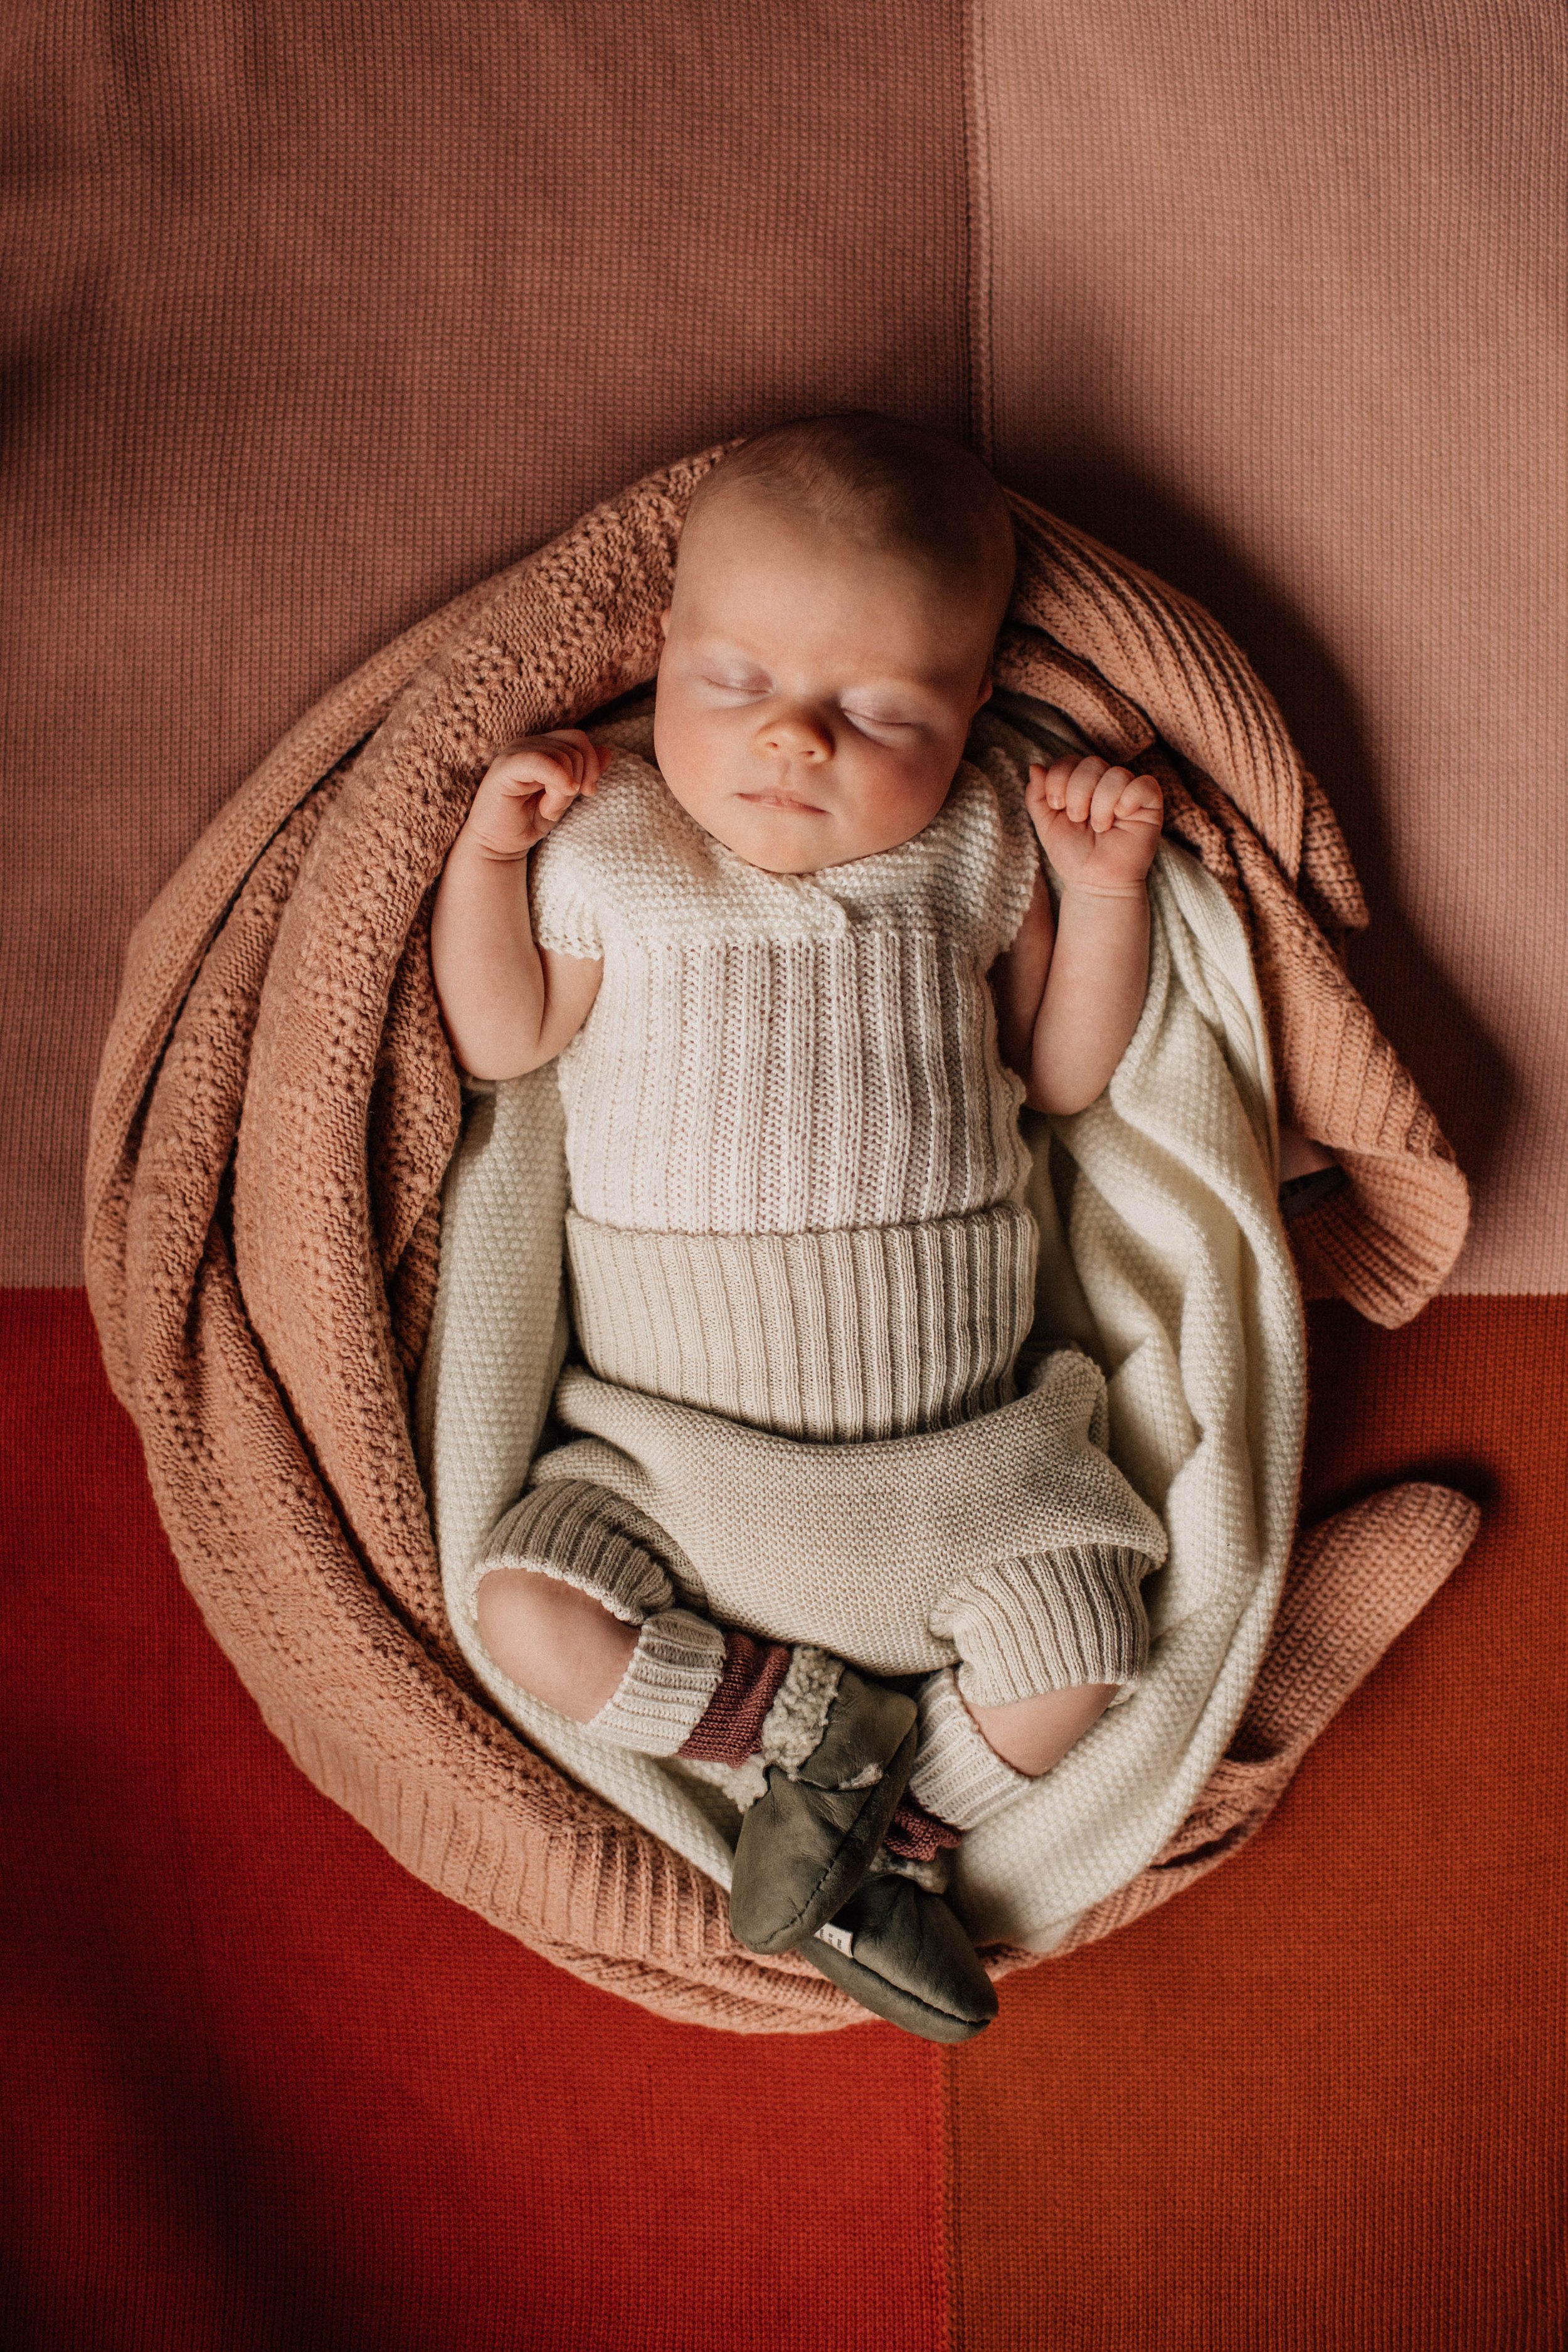 geelong-newborn-photographer-sleeping-infant.jpg